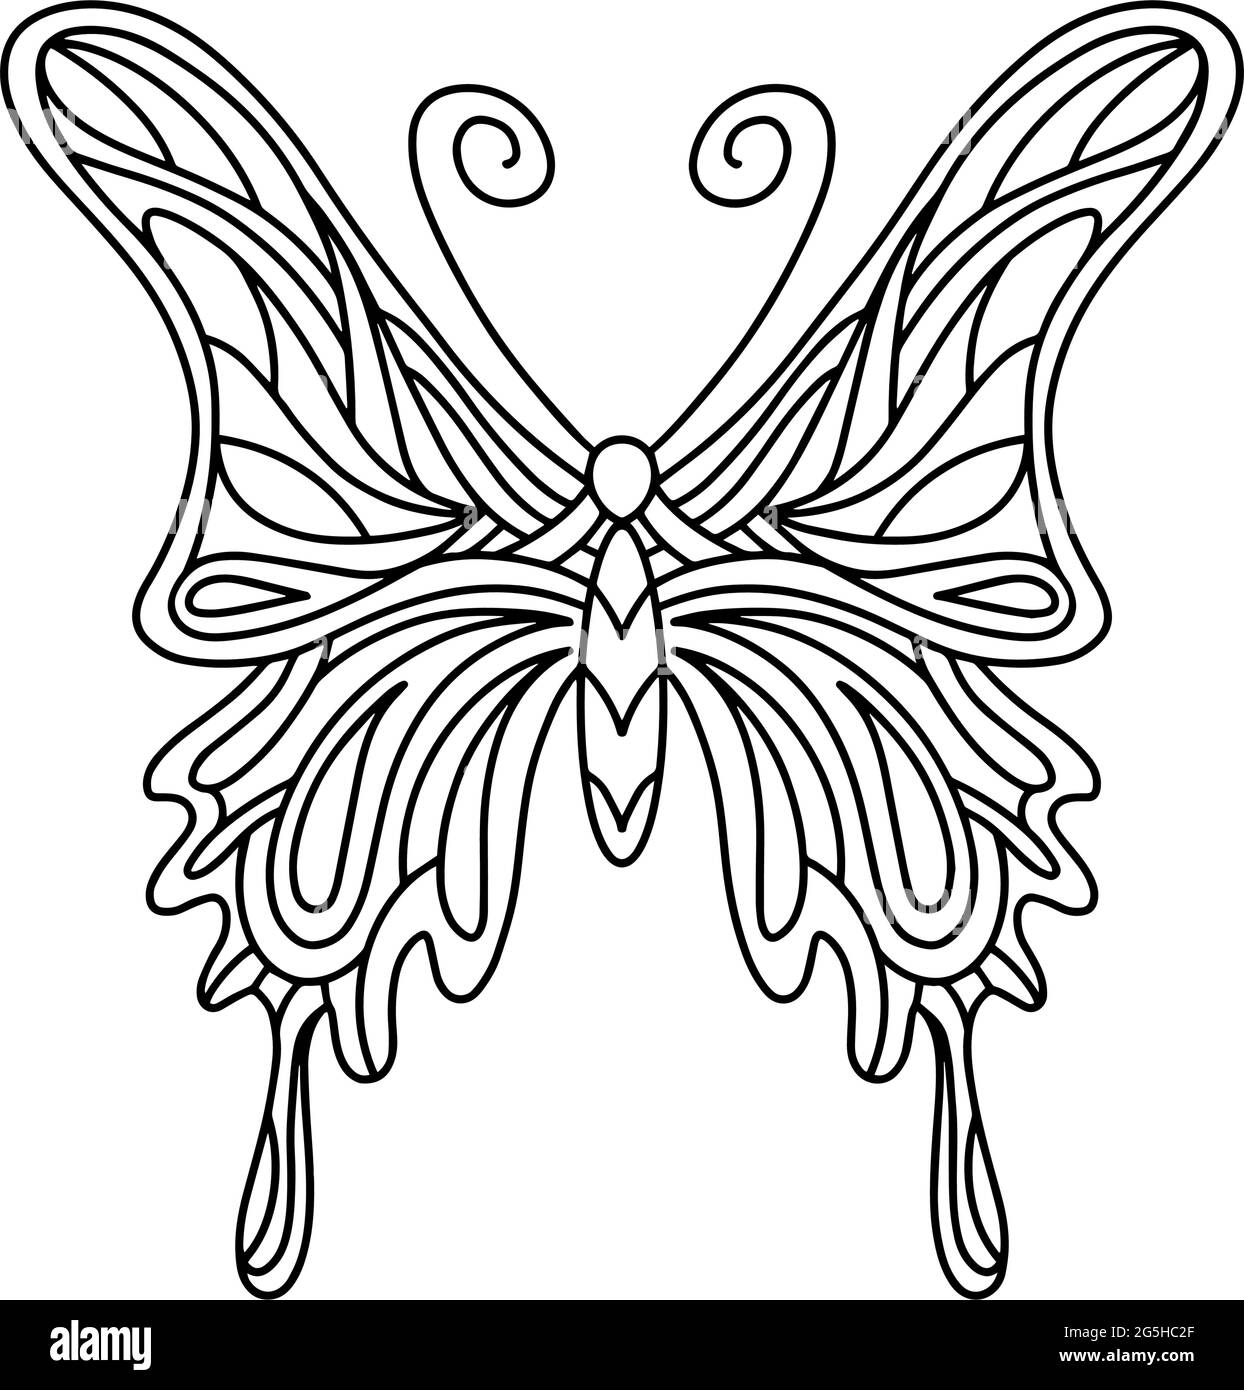 Schmetterling Bild. Lineare Illustration eines Schmetterlings. Das Mandala-Insekt.  Vektorgrafik Stock-Vektorgrafik - Alamy